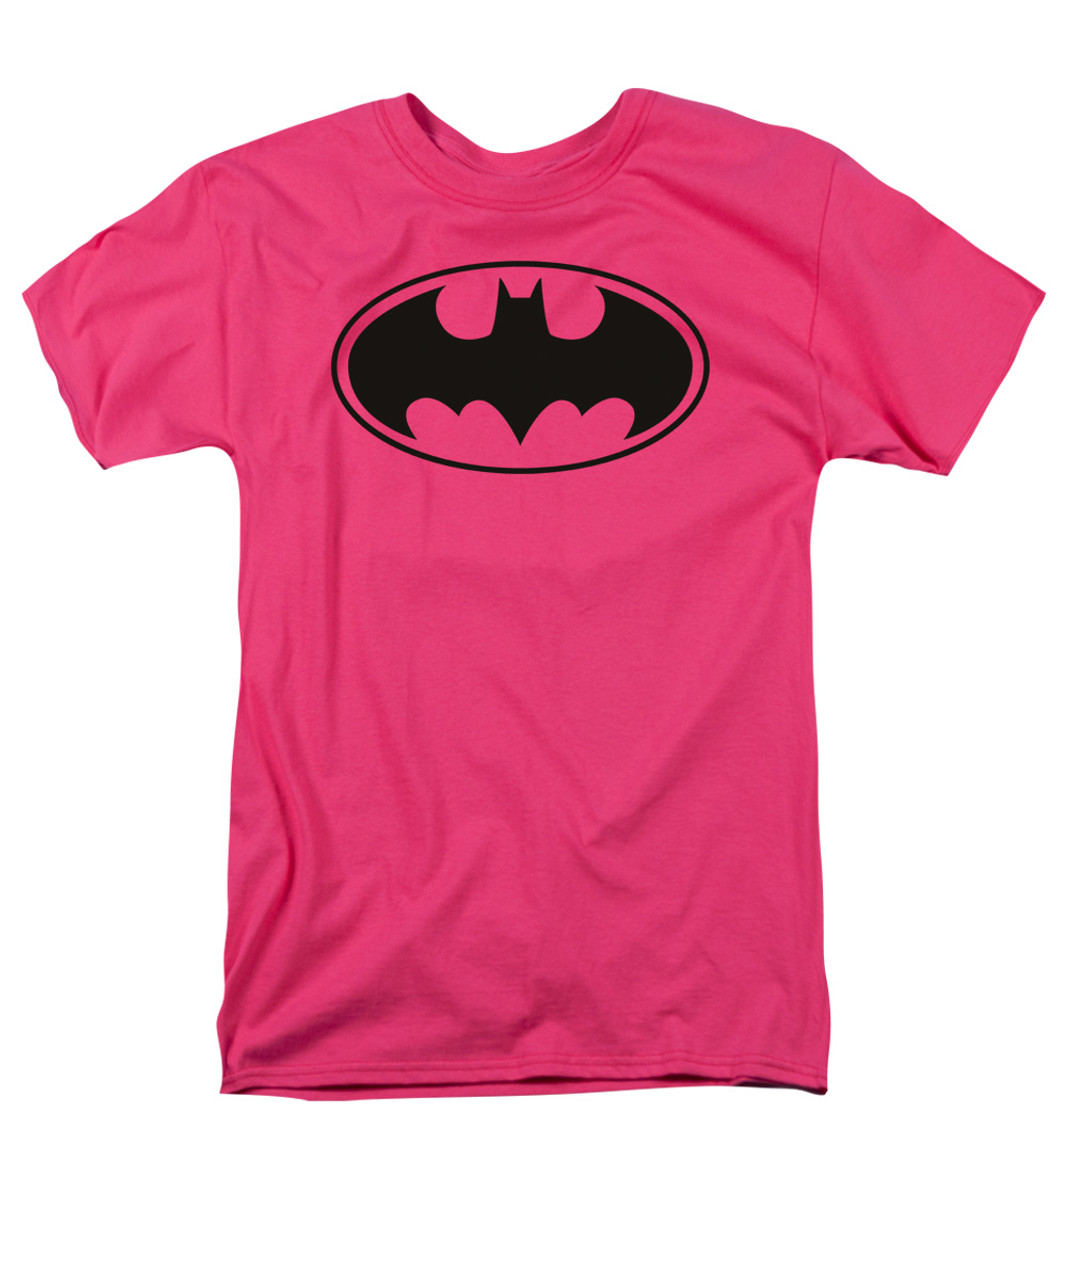 Batman T-Shirt-Pink Bat-NerdKungFu,Plus Size Batman t shirt